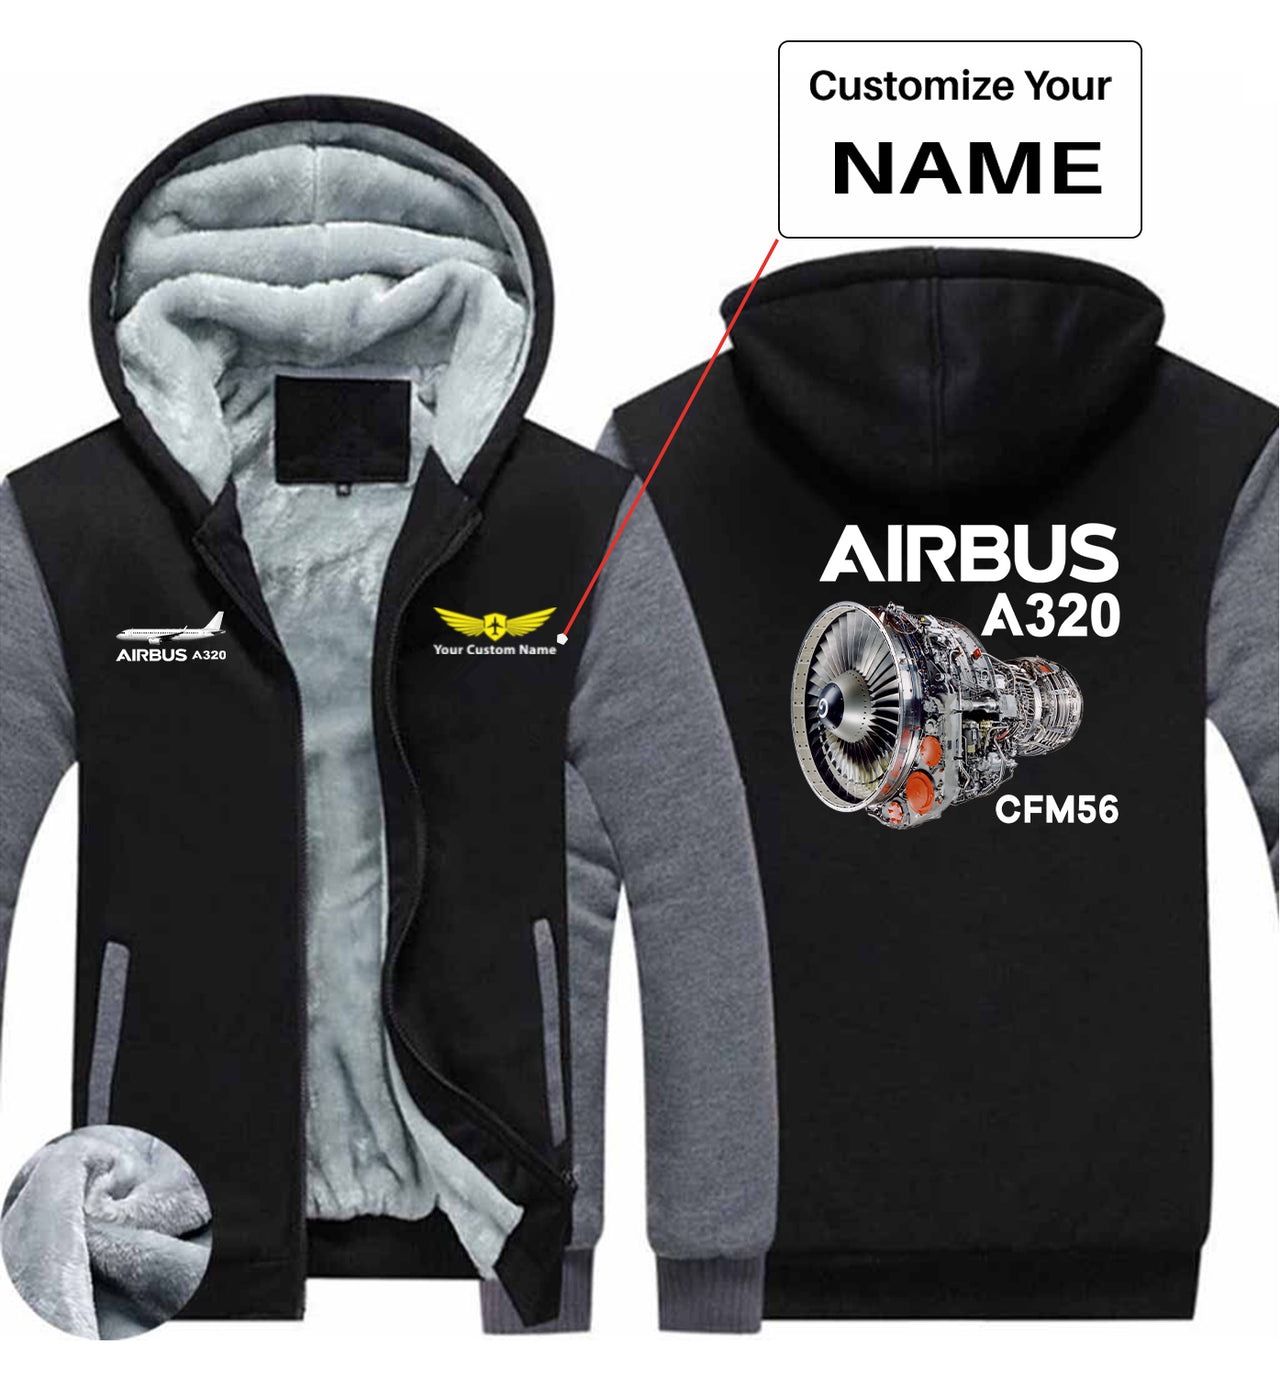 Airbus A320 & CFM56 Engine Designed Zipped Sweatshirts